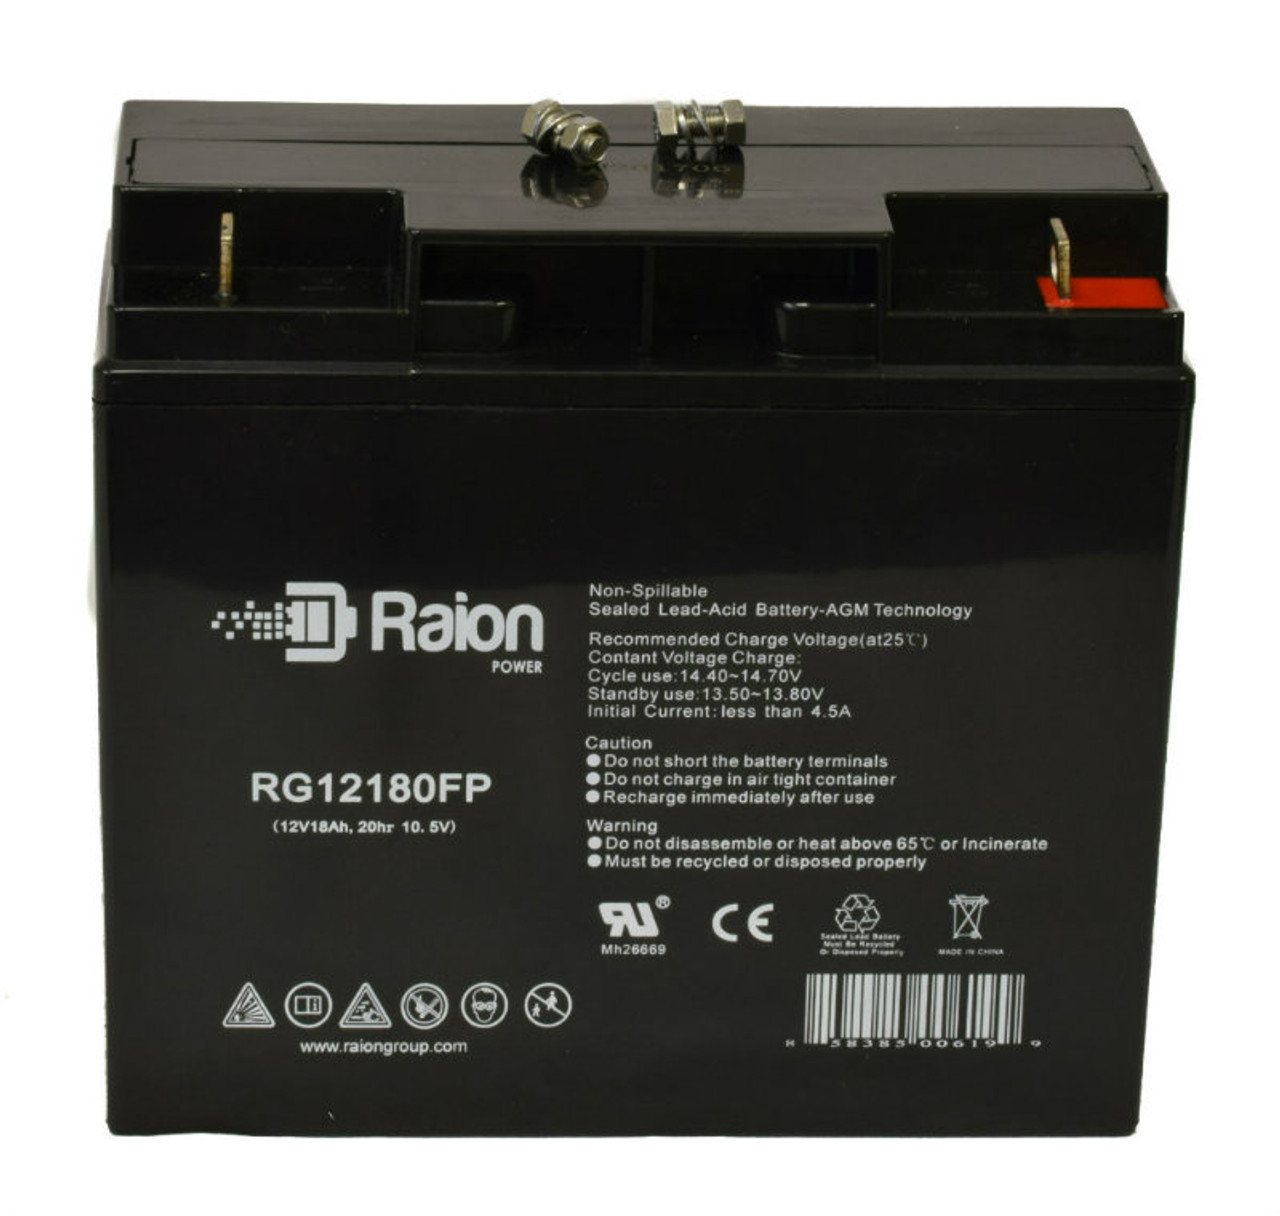 Raion Power RG12180FP 12V 18Ah Lead Acid Battery for American Vermerien AGM1280T